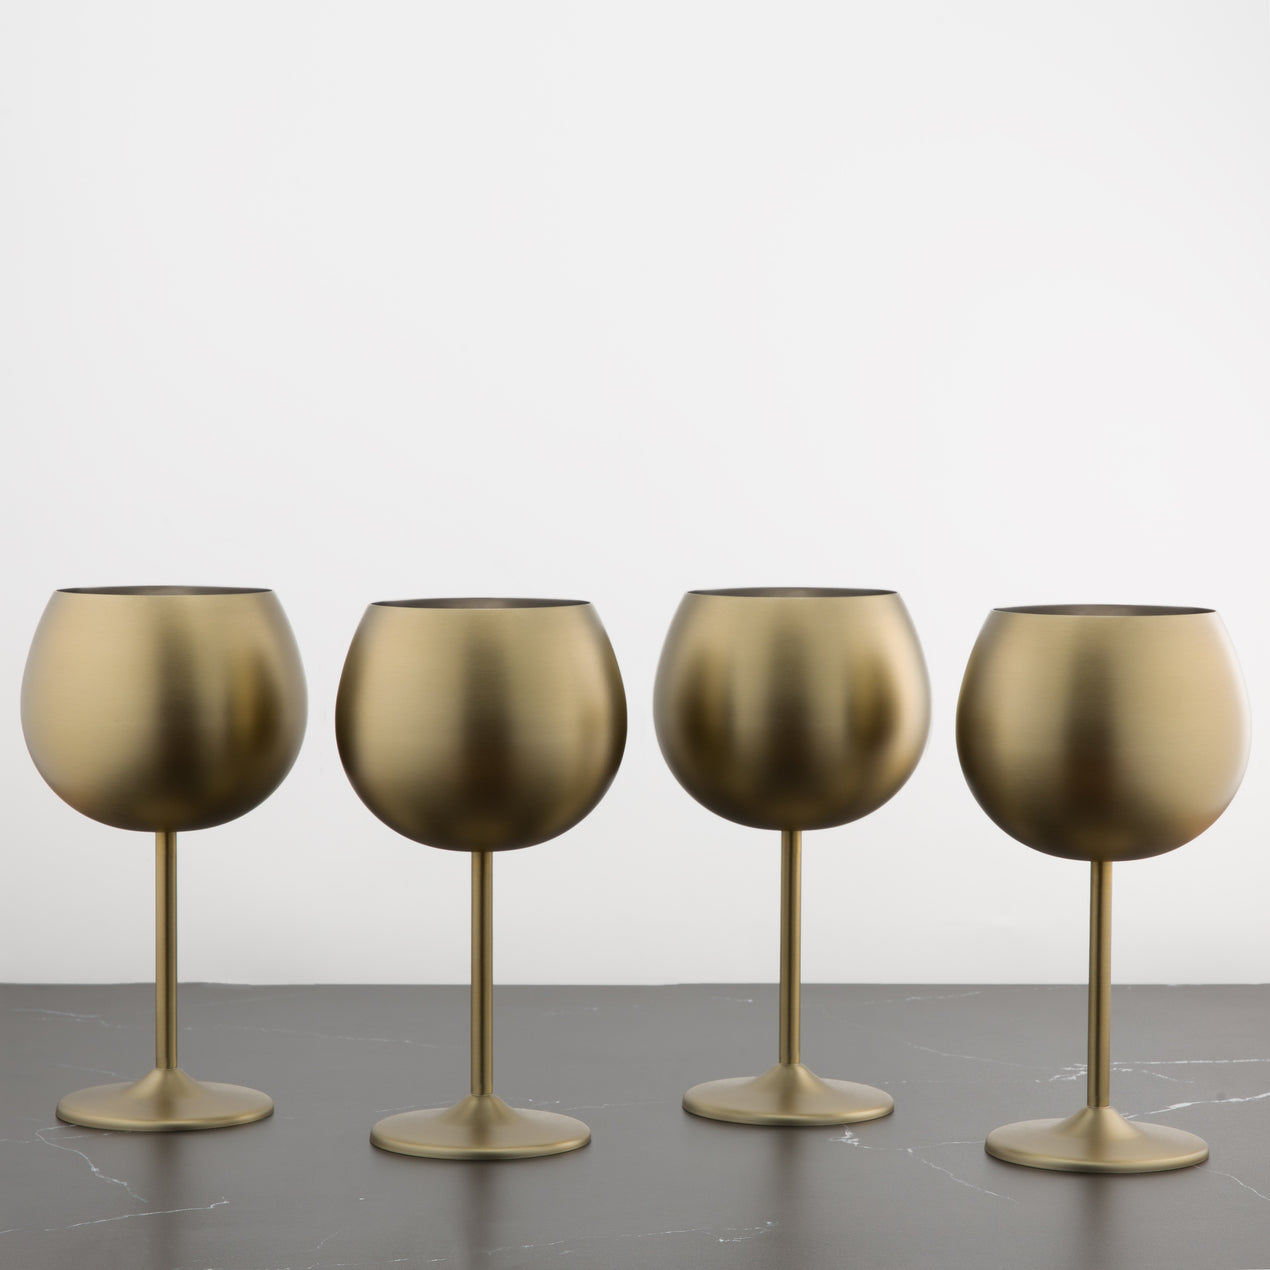 Cambridge 18 oz Copper Stainless Steel White Wine Glasses, Set of 4 - Copper